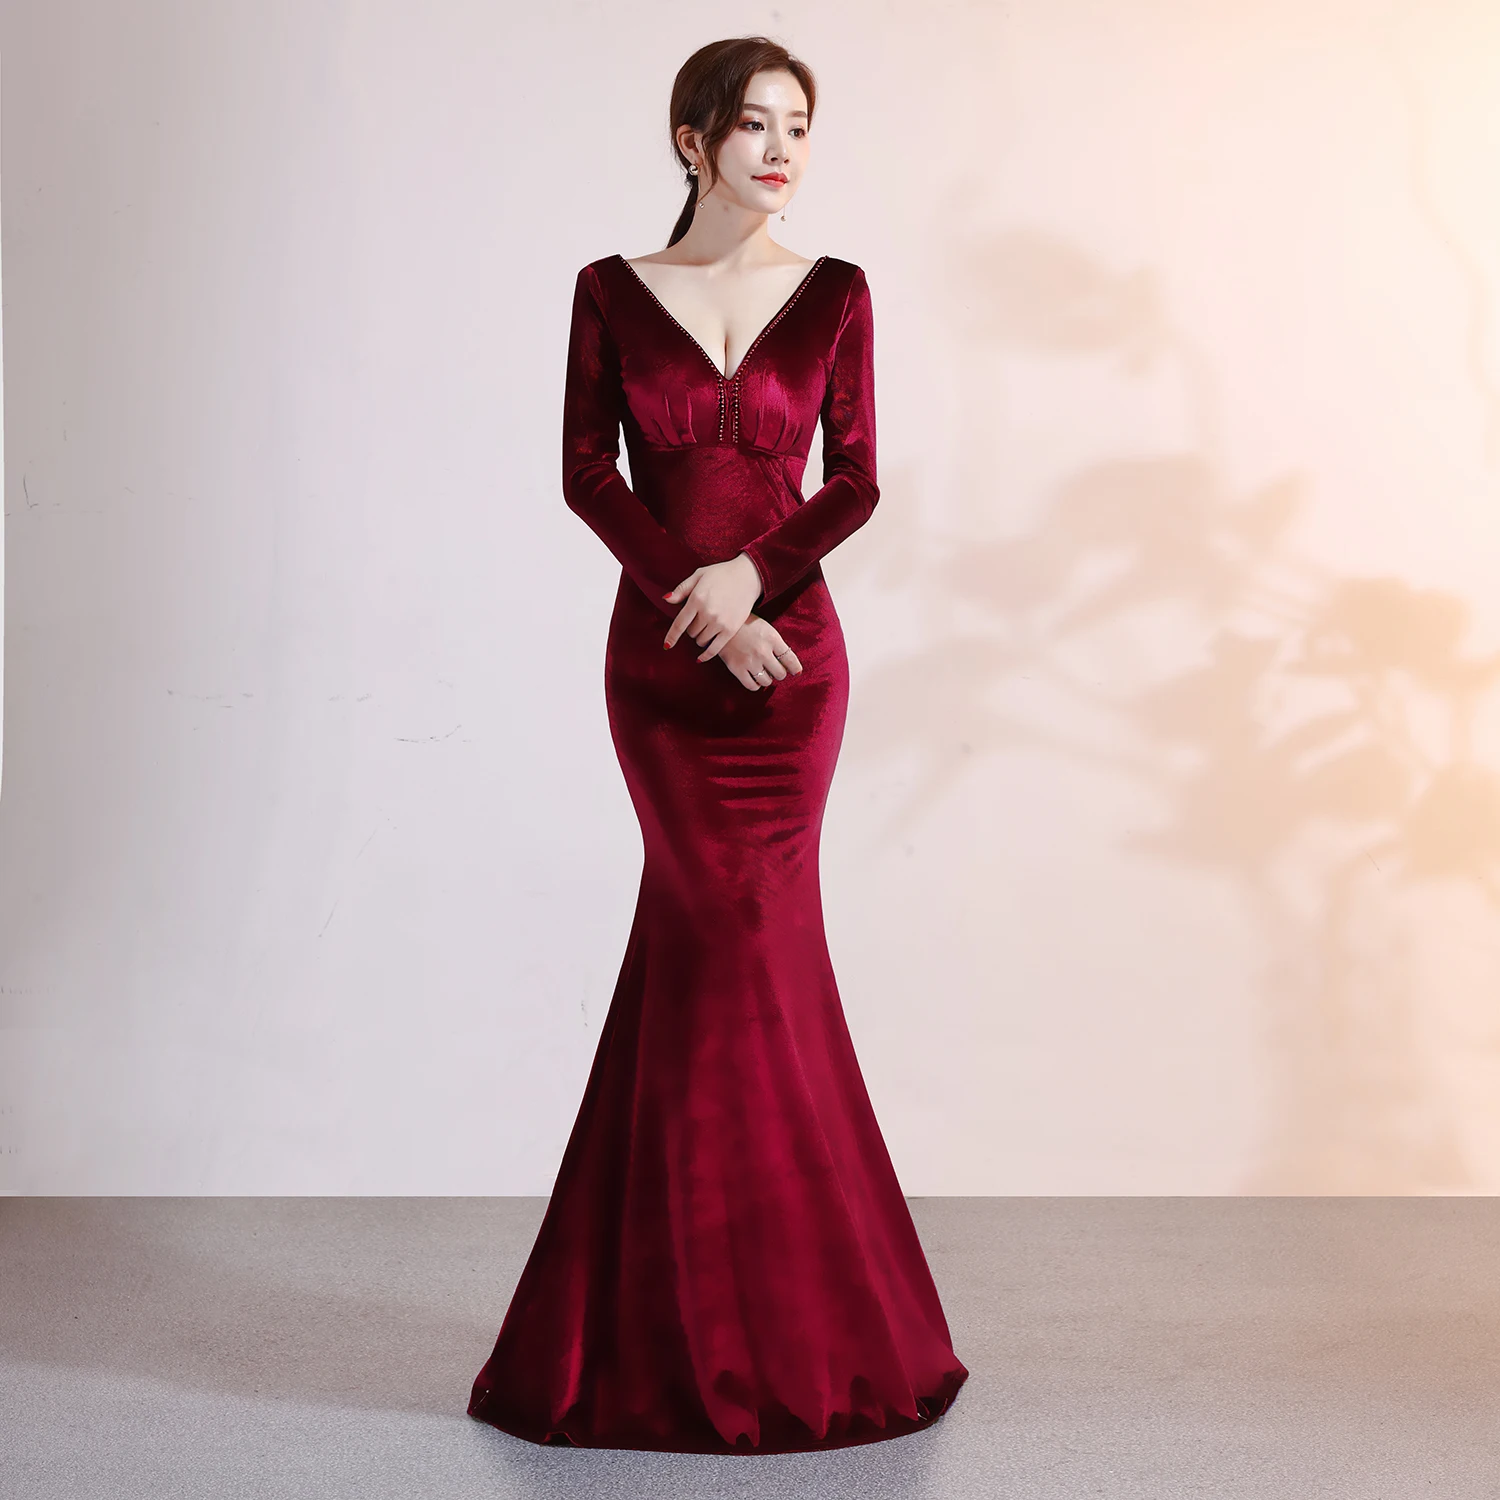 Fashion dress sexy woman | 2mrk Sale Online